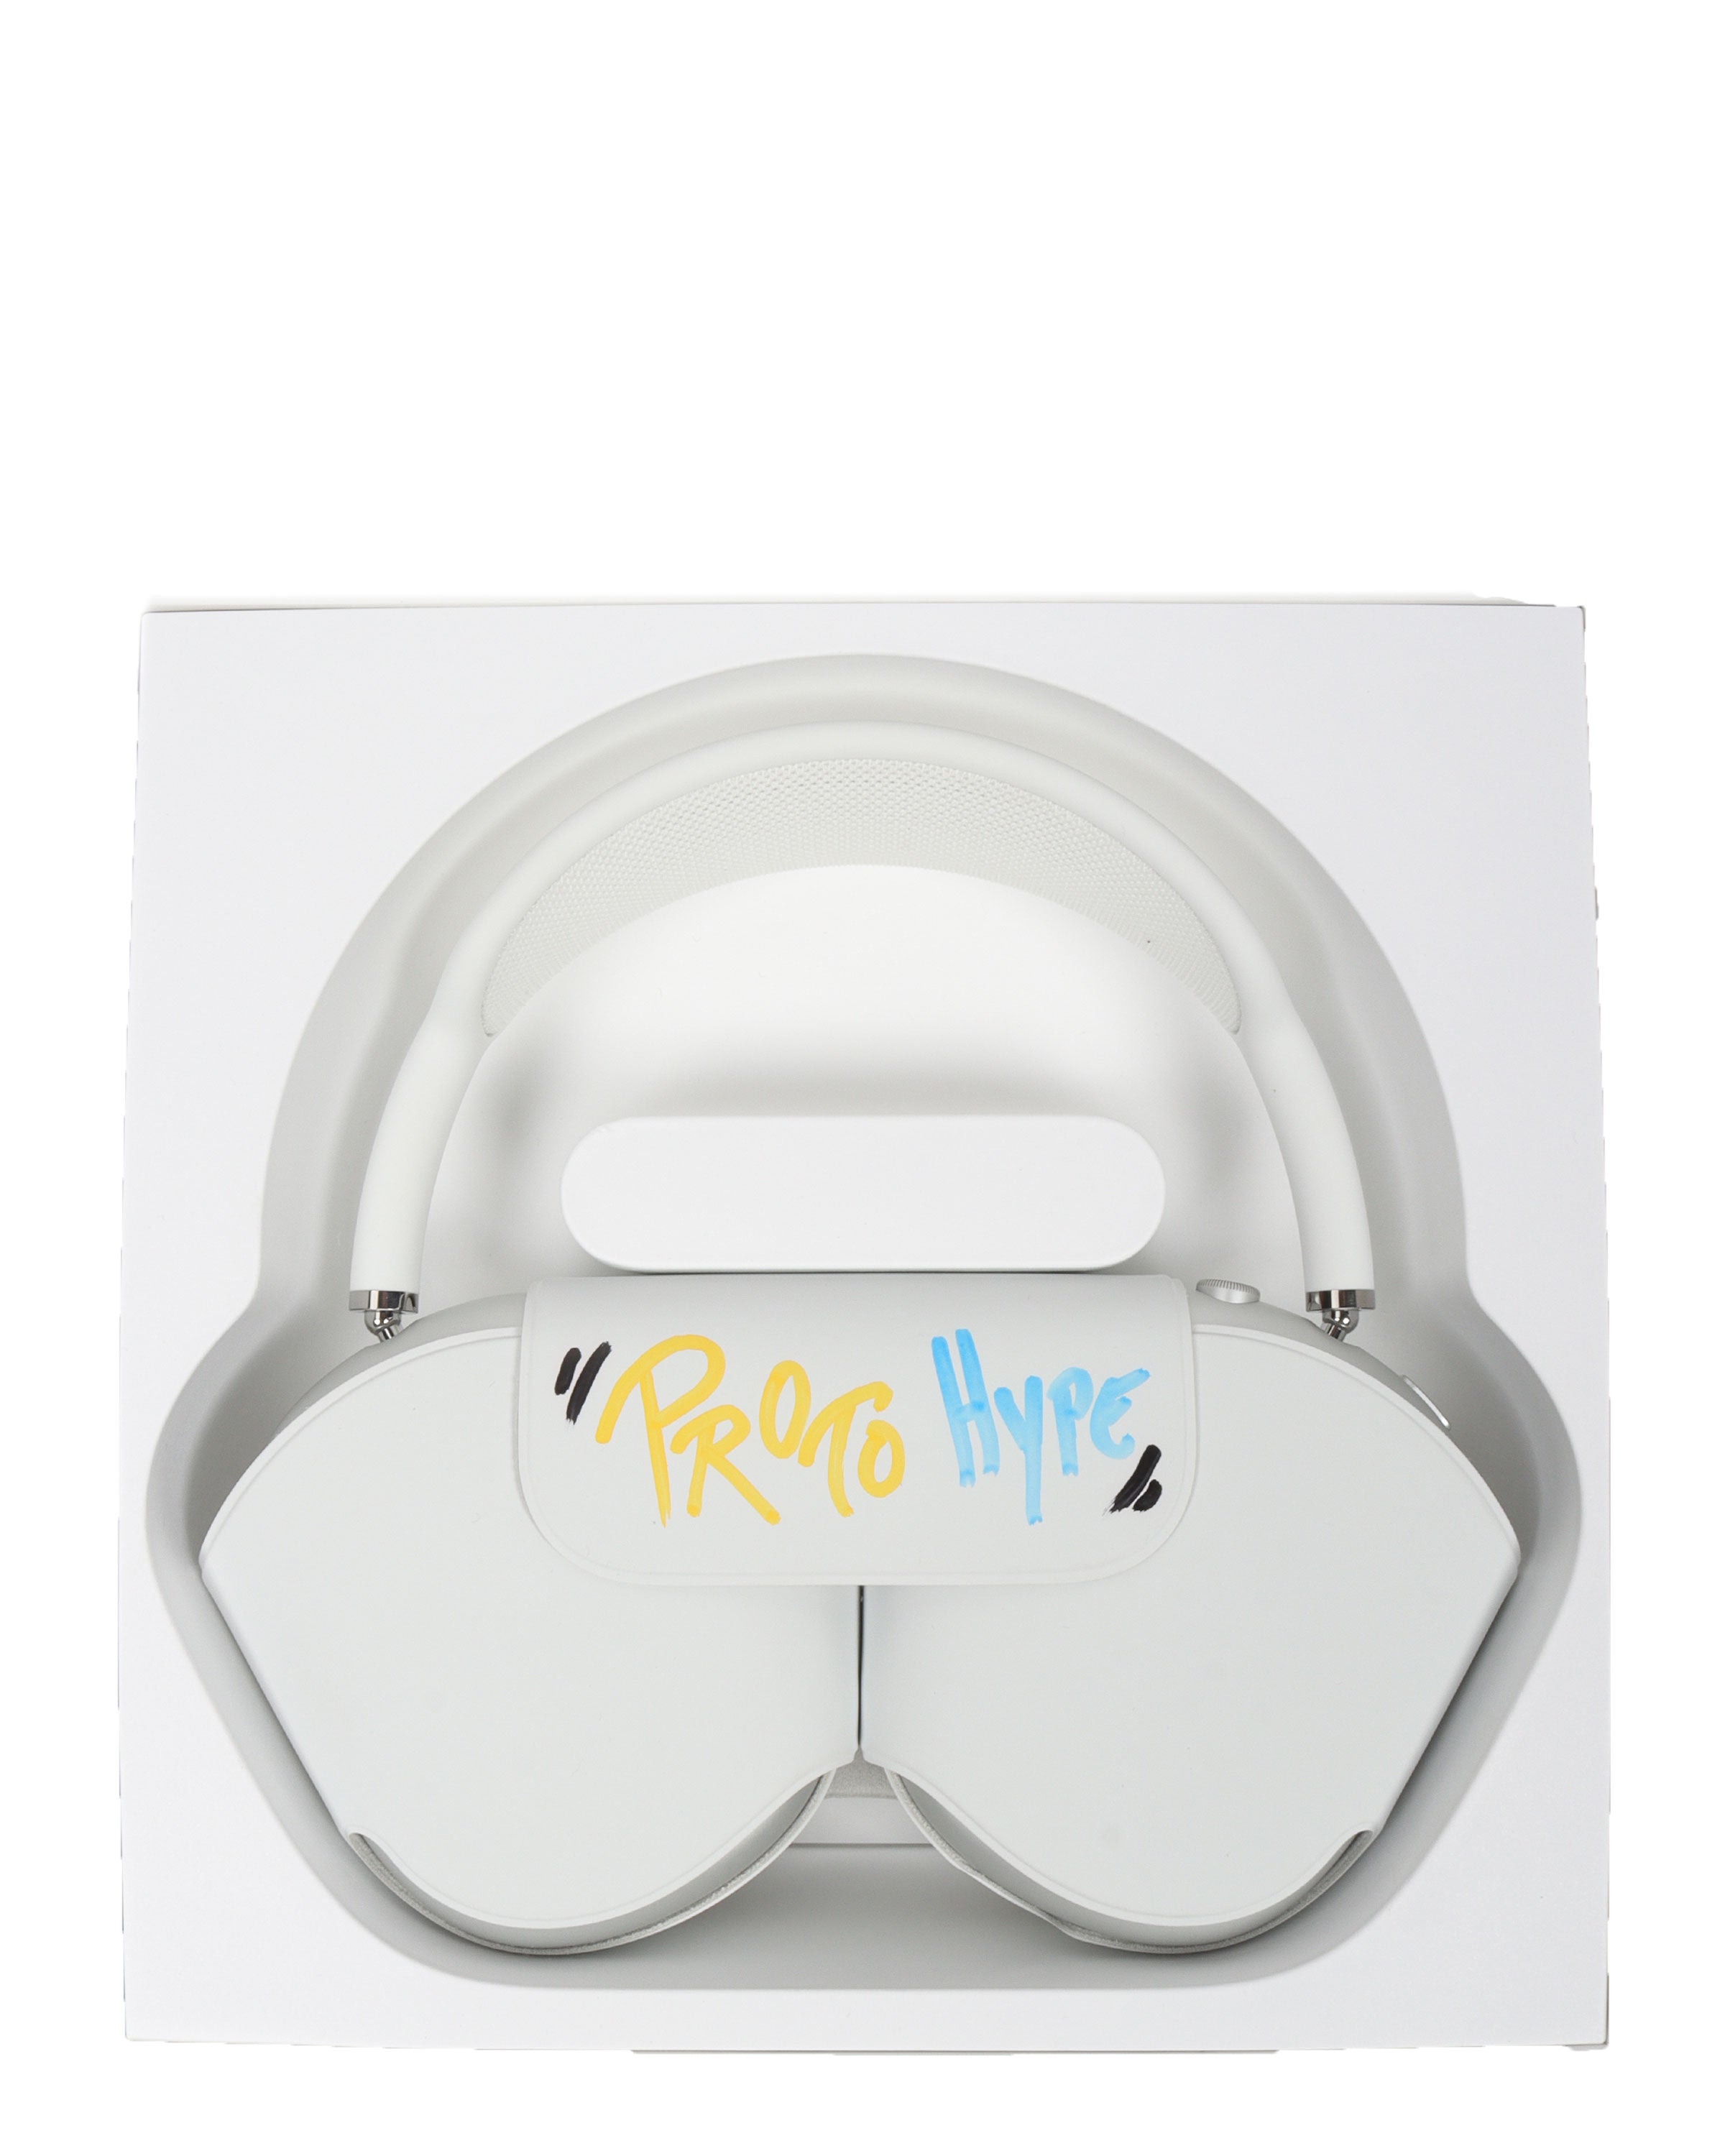 Matty Boy Hand-Painted Airpod Max Headphones